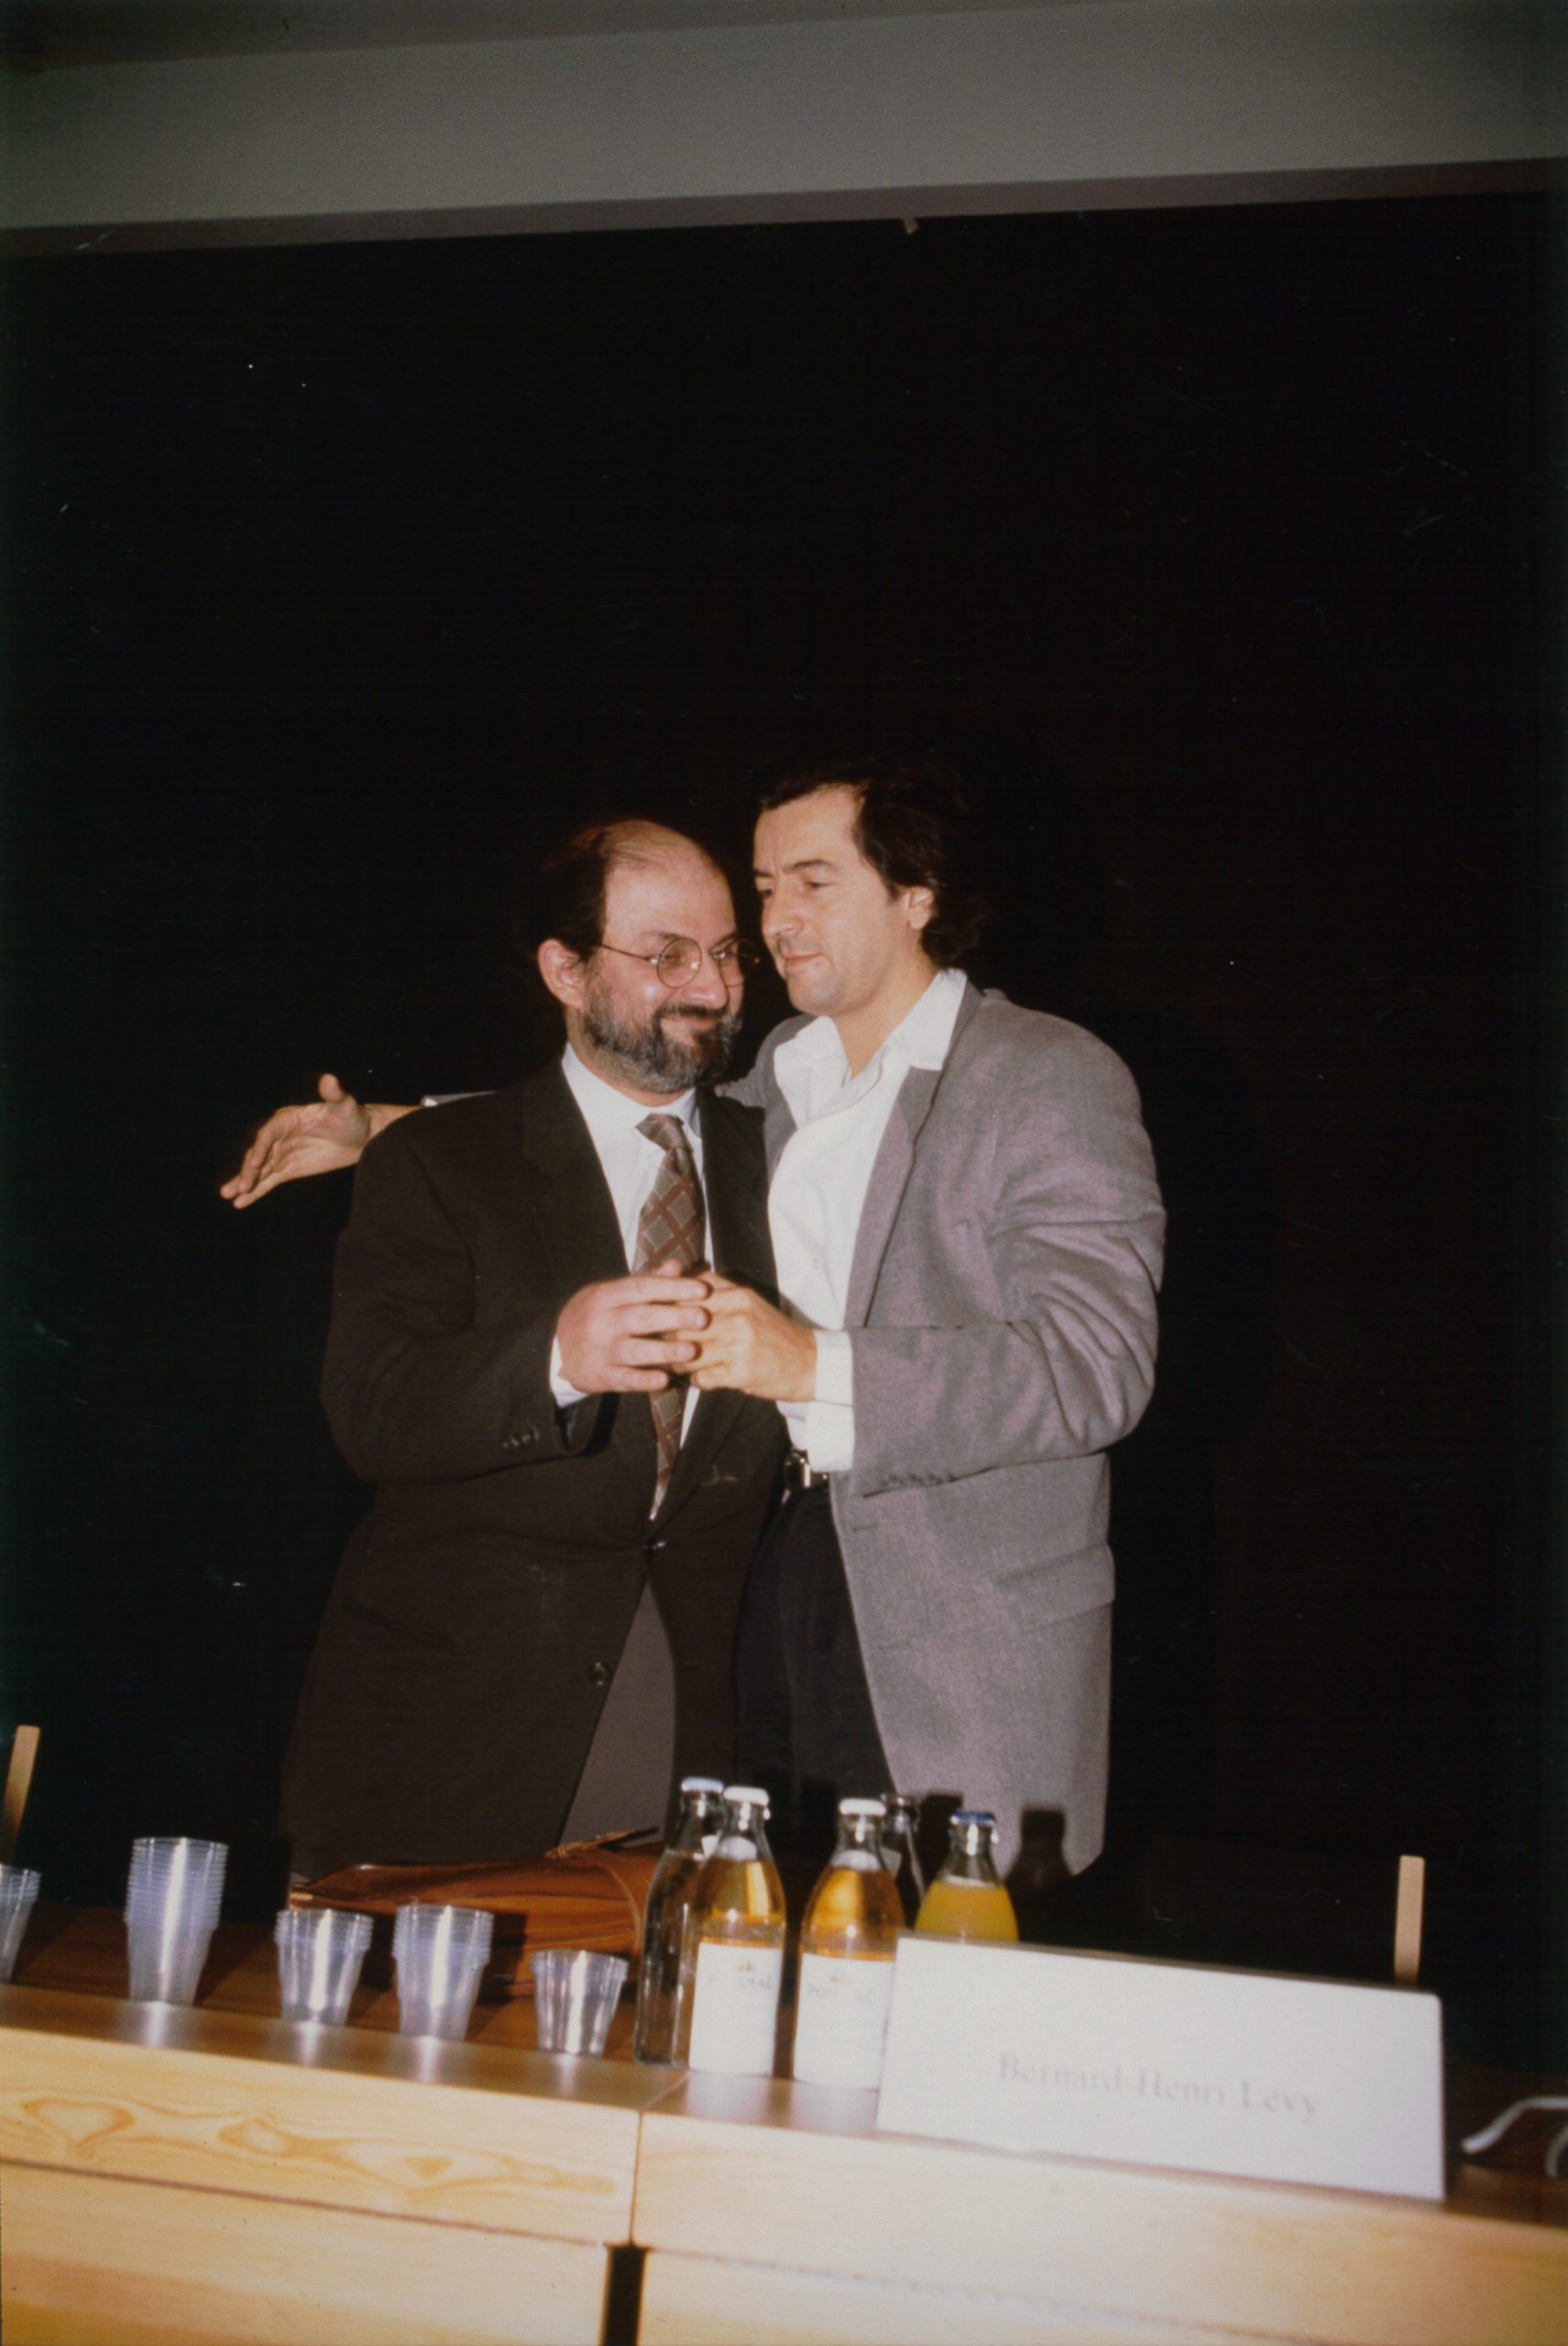 Bernard-Henri Lévy and Salman Rushdie in Helsinki in October 1992.